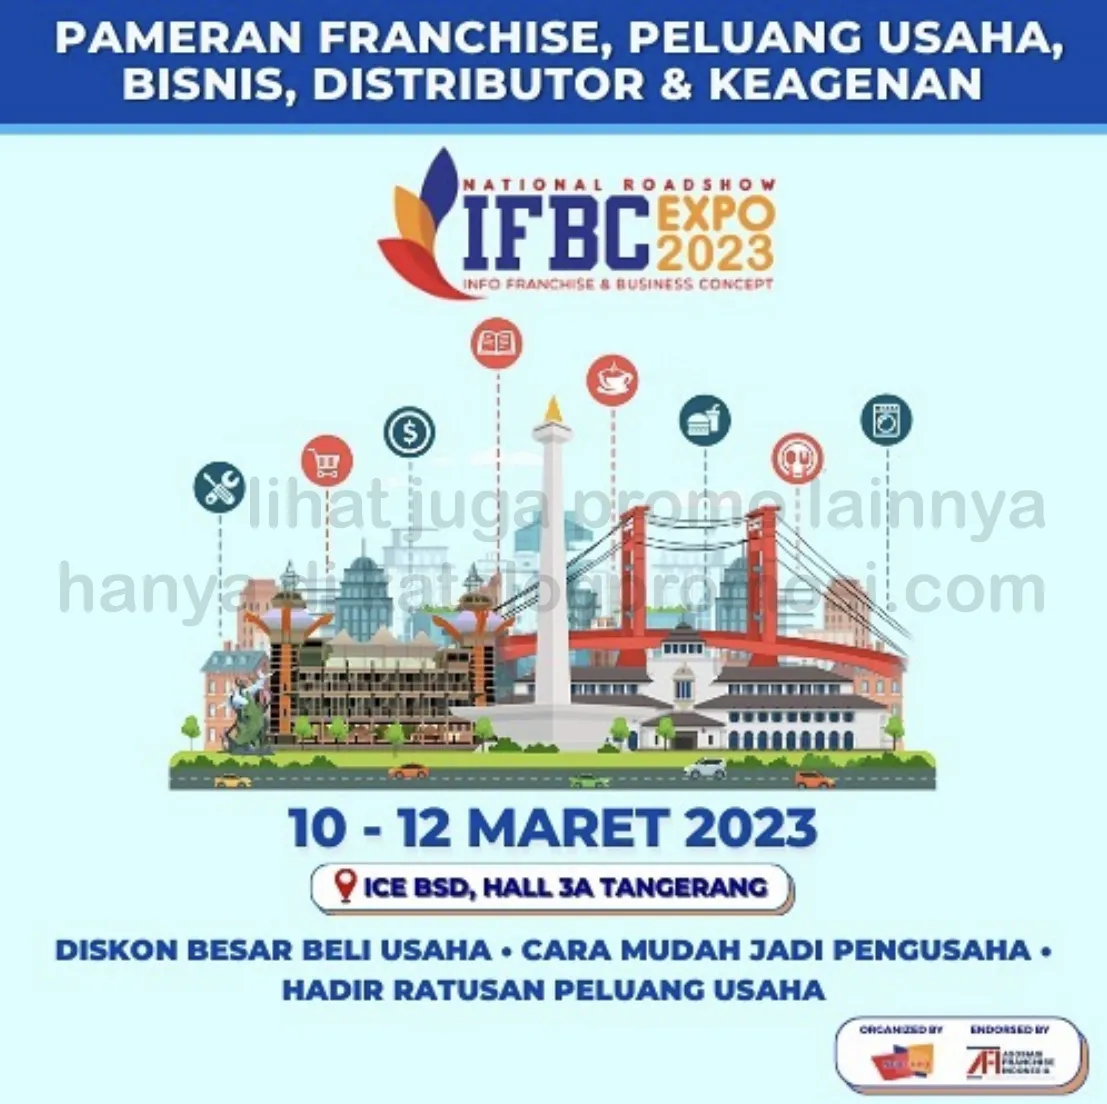 INFO FRANCHISE & BUSINESS CONCEPT (IFBC) 2023 JAKARTA - Pameran Franchise & Peluang Usaha Terkini